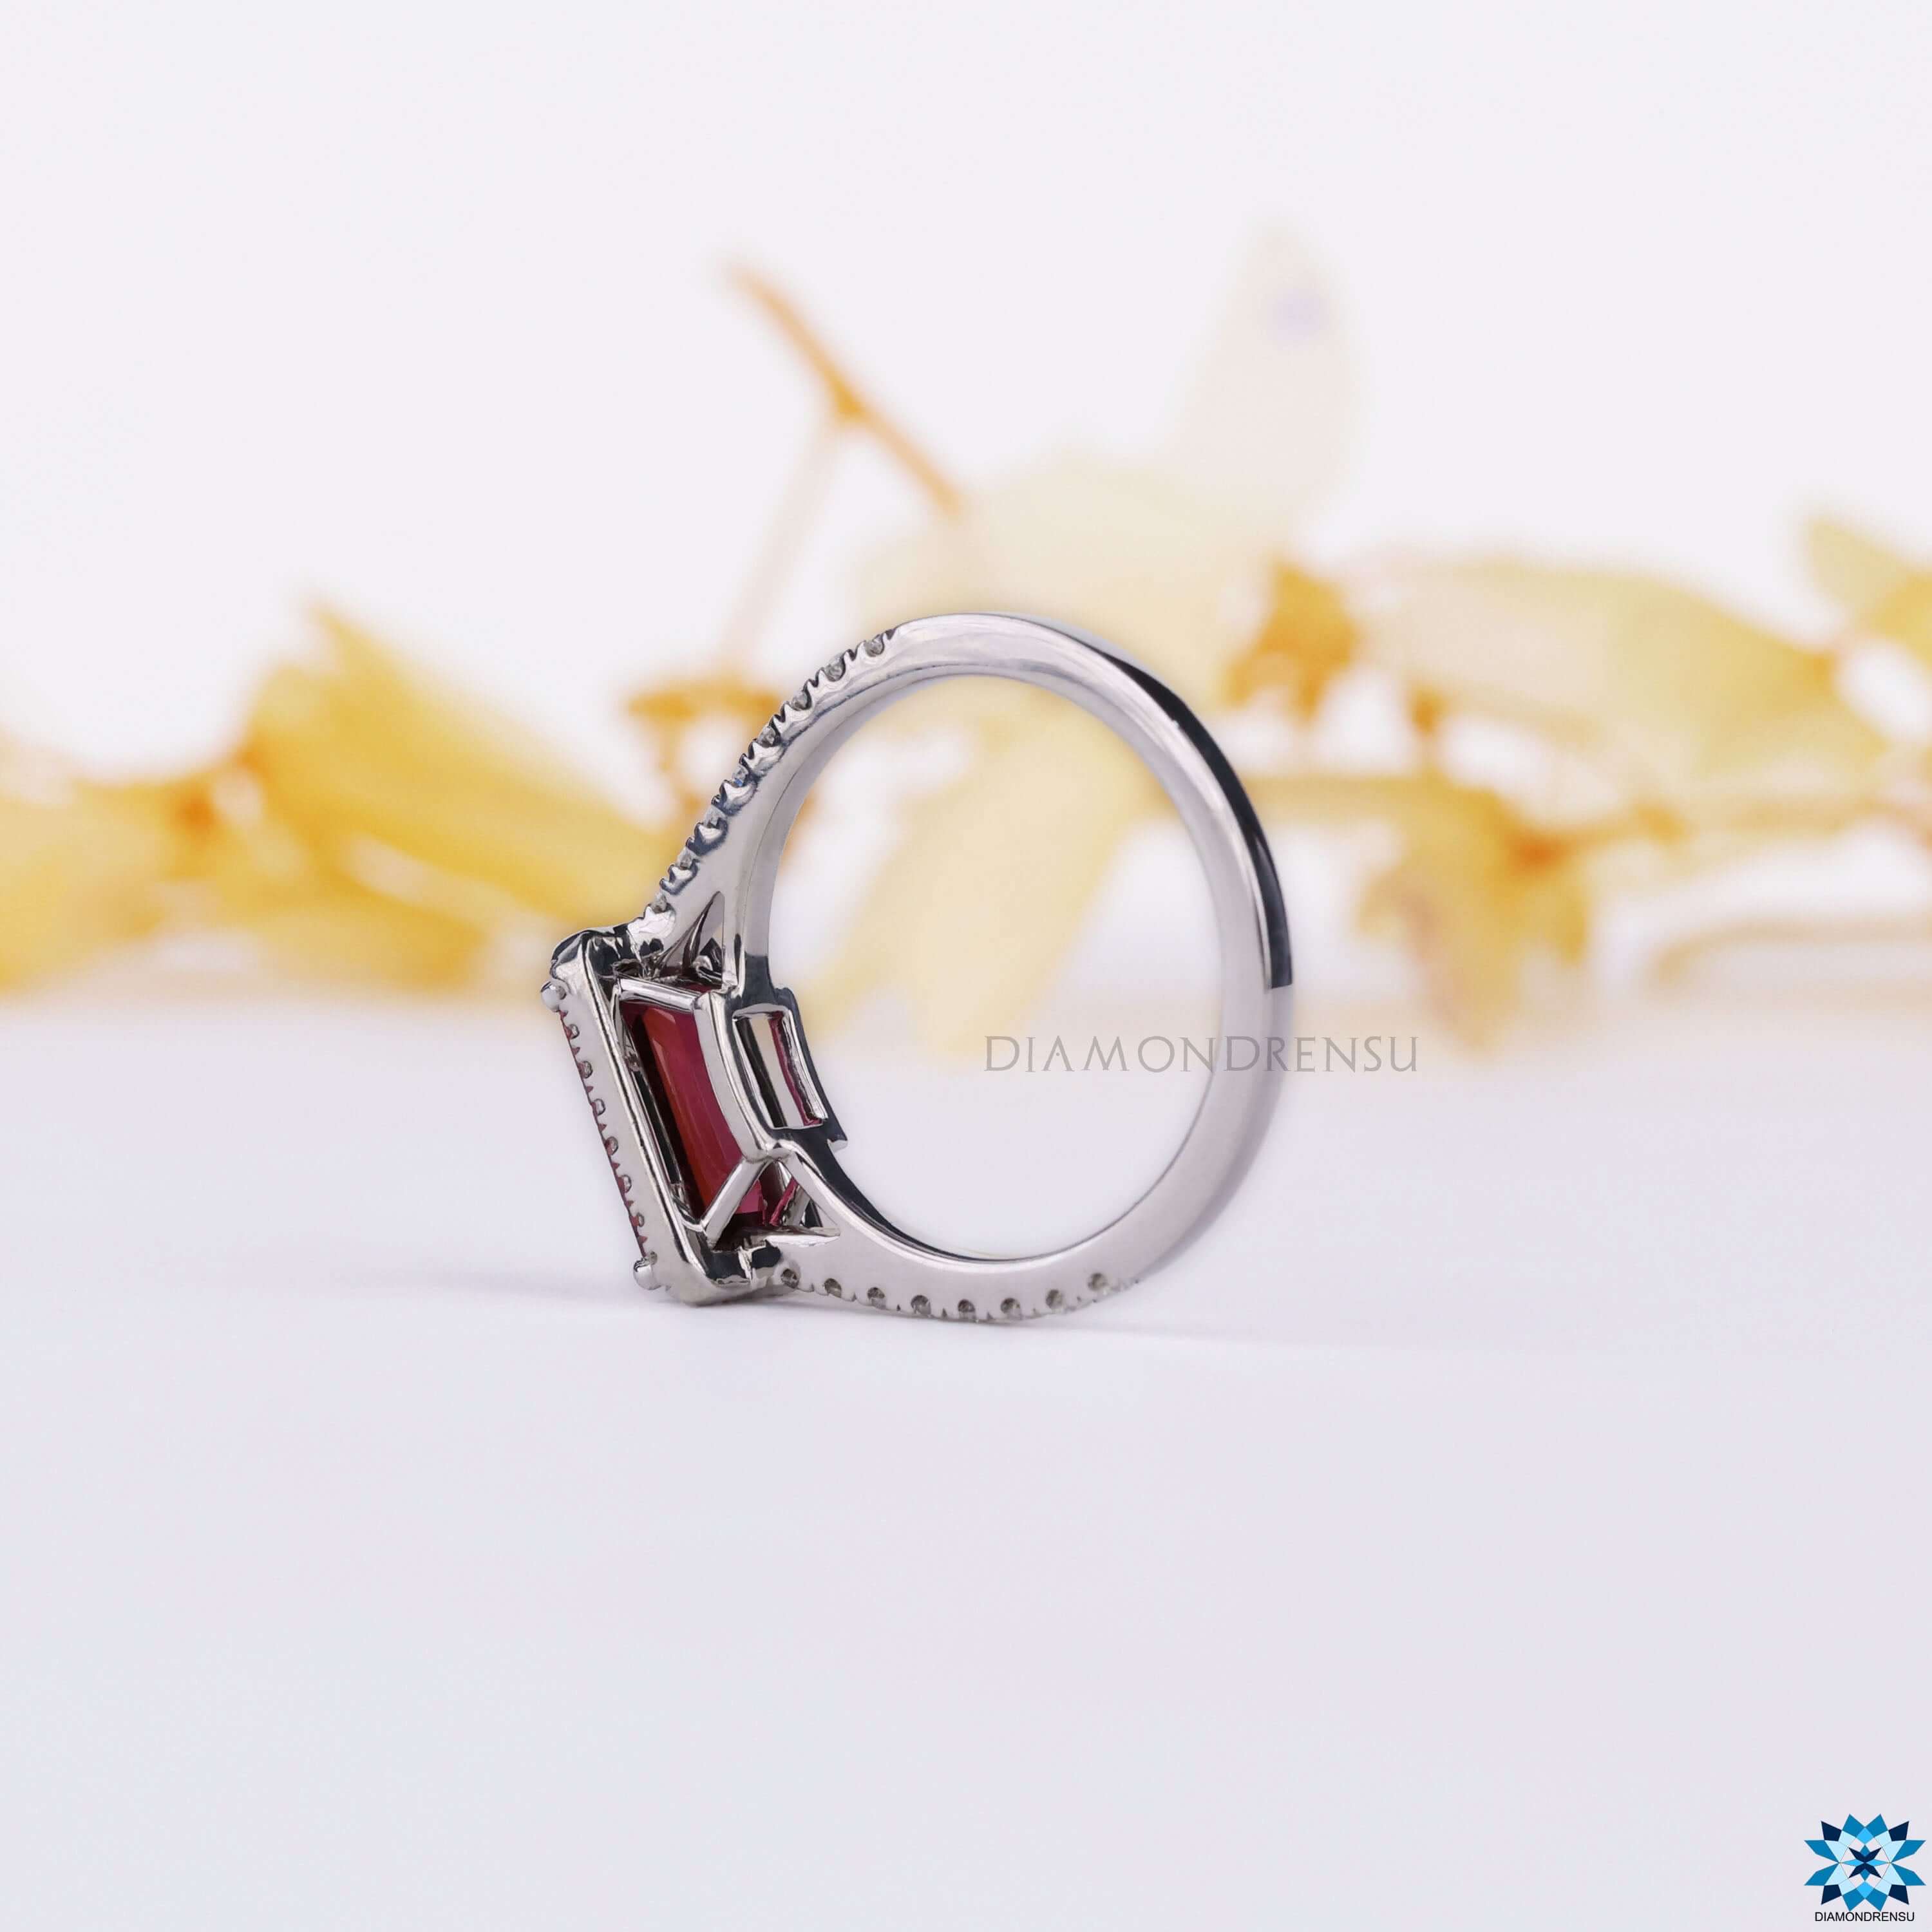 tourmaline engagement ring - diamondrensu